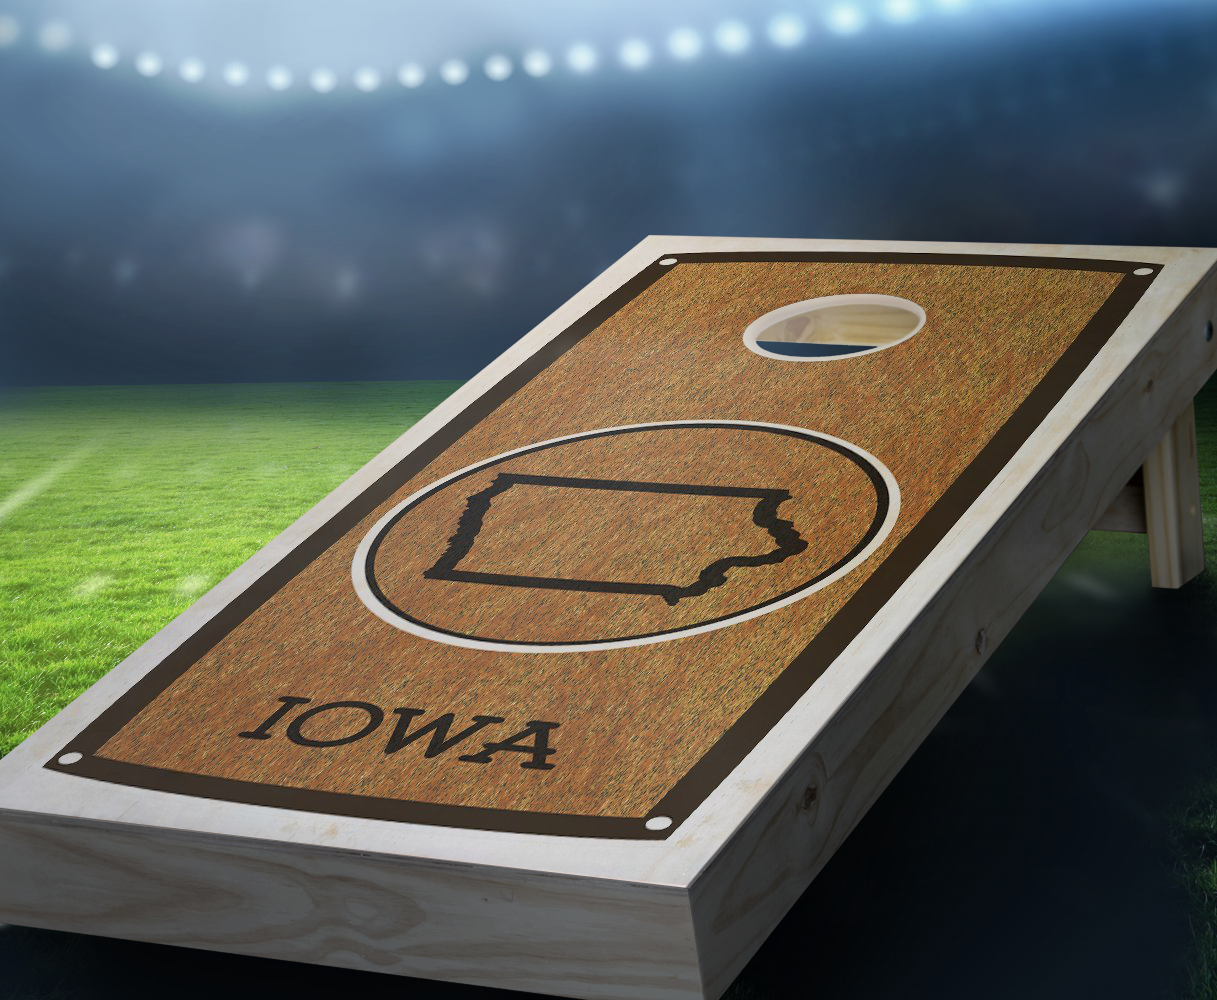 "Iowa" State Stained Cornhole Board